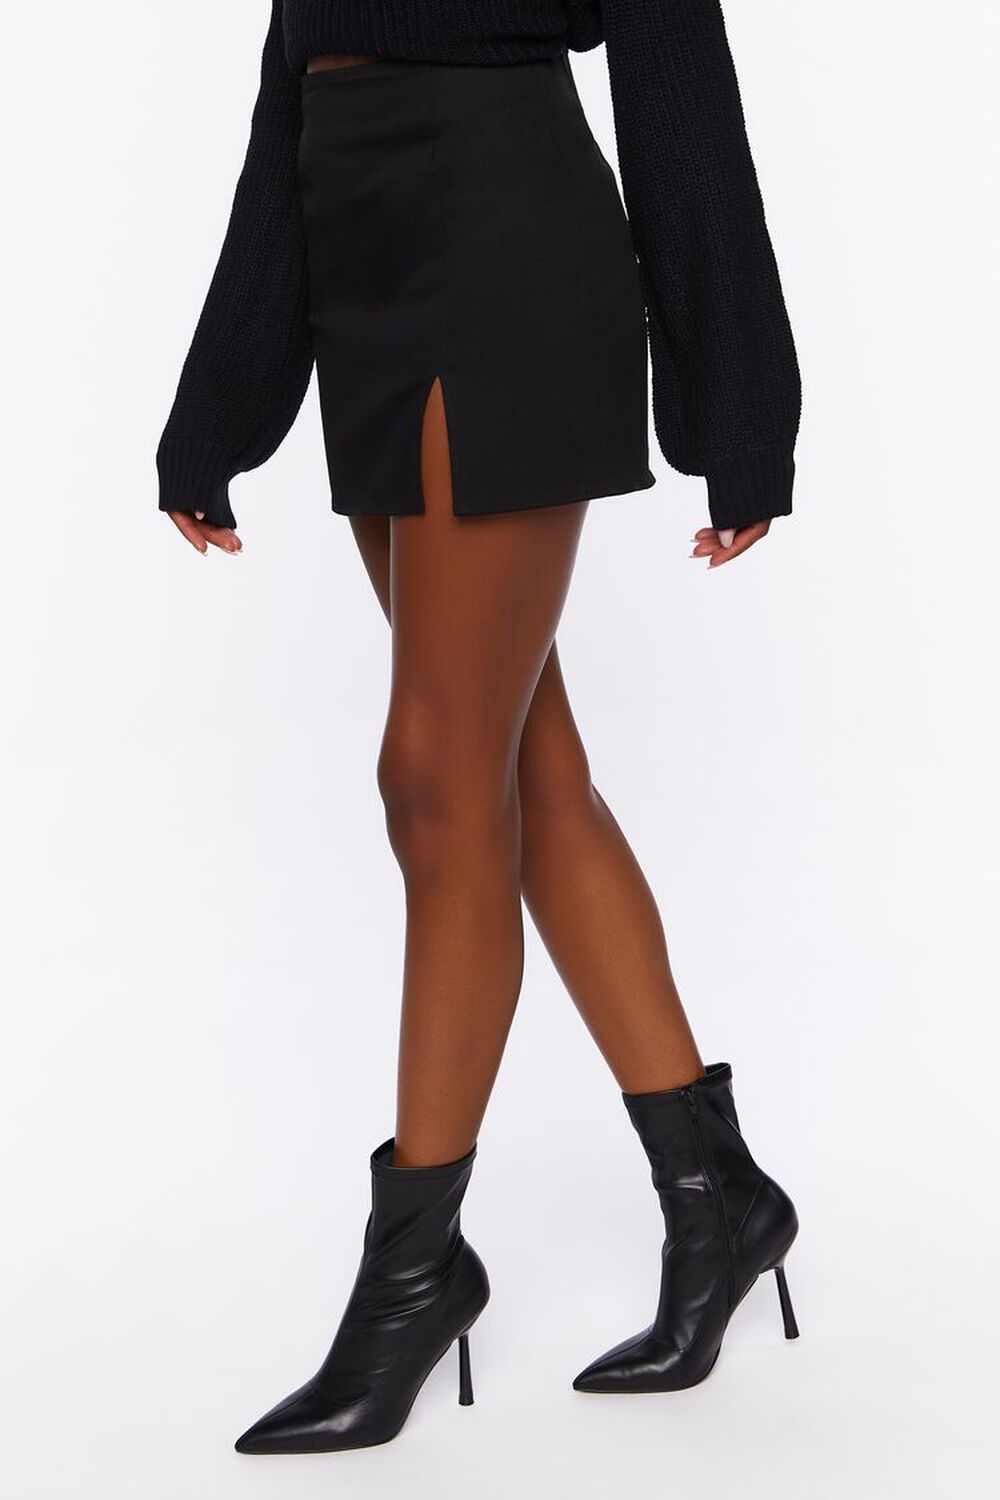 BLACK Twill Mid-Rise Mini Skirt, image 3